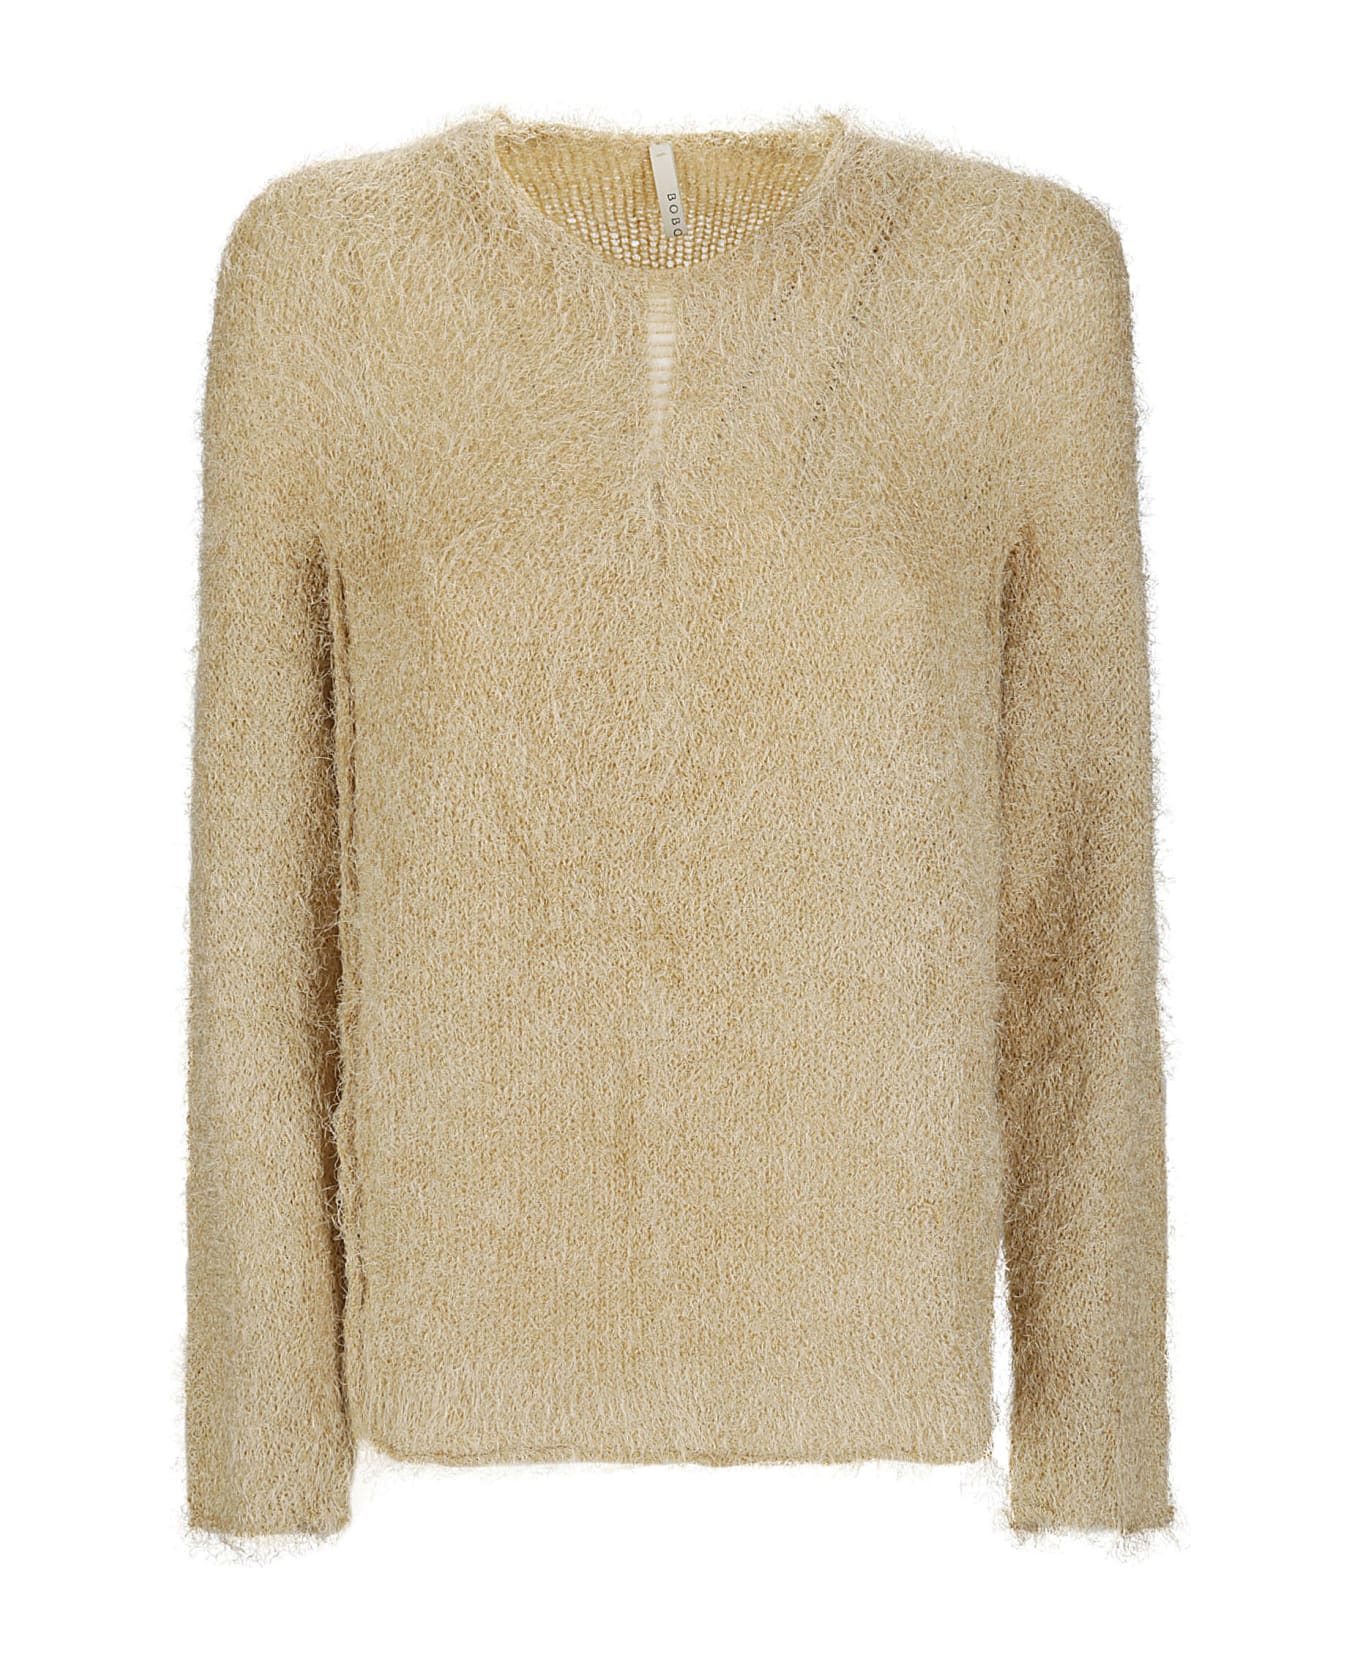 Boboutic Sweater - SAND